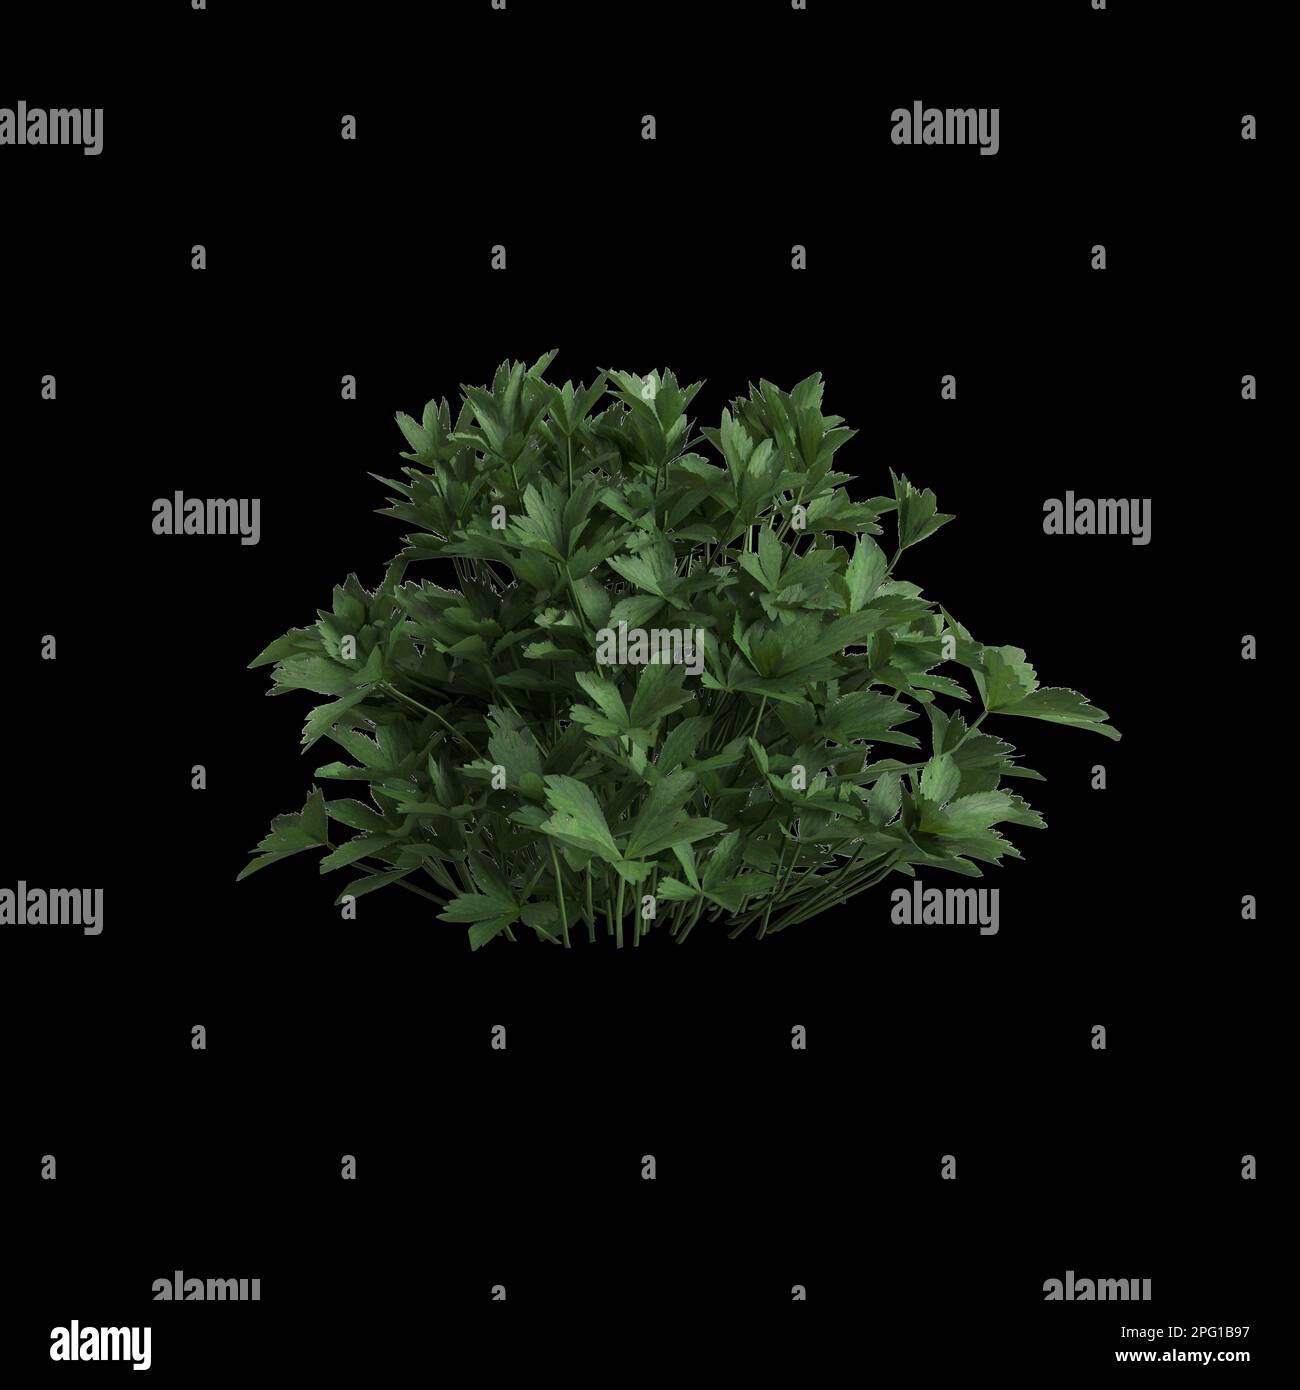 3d illustration of astrantia major bush isolated on black background Stock Photo